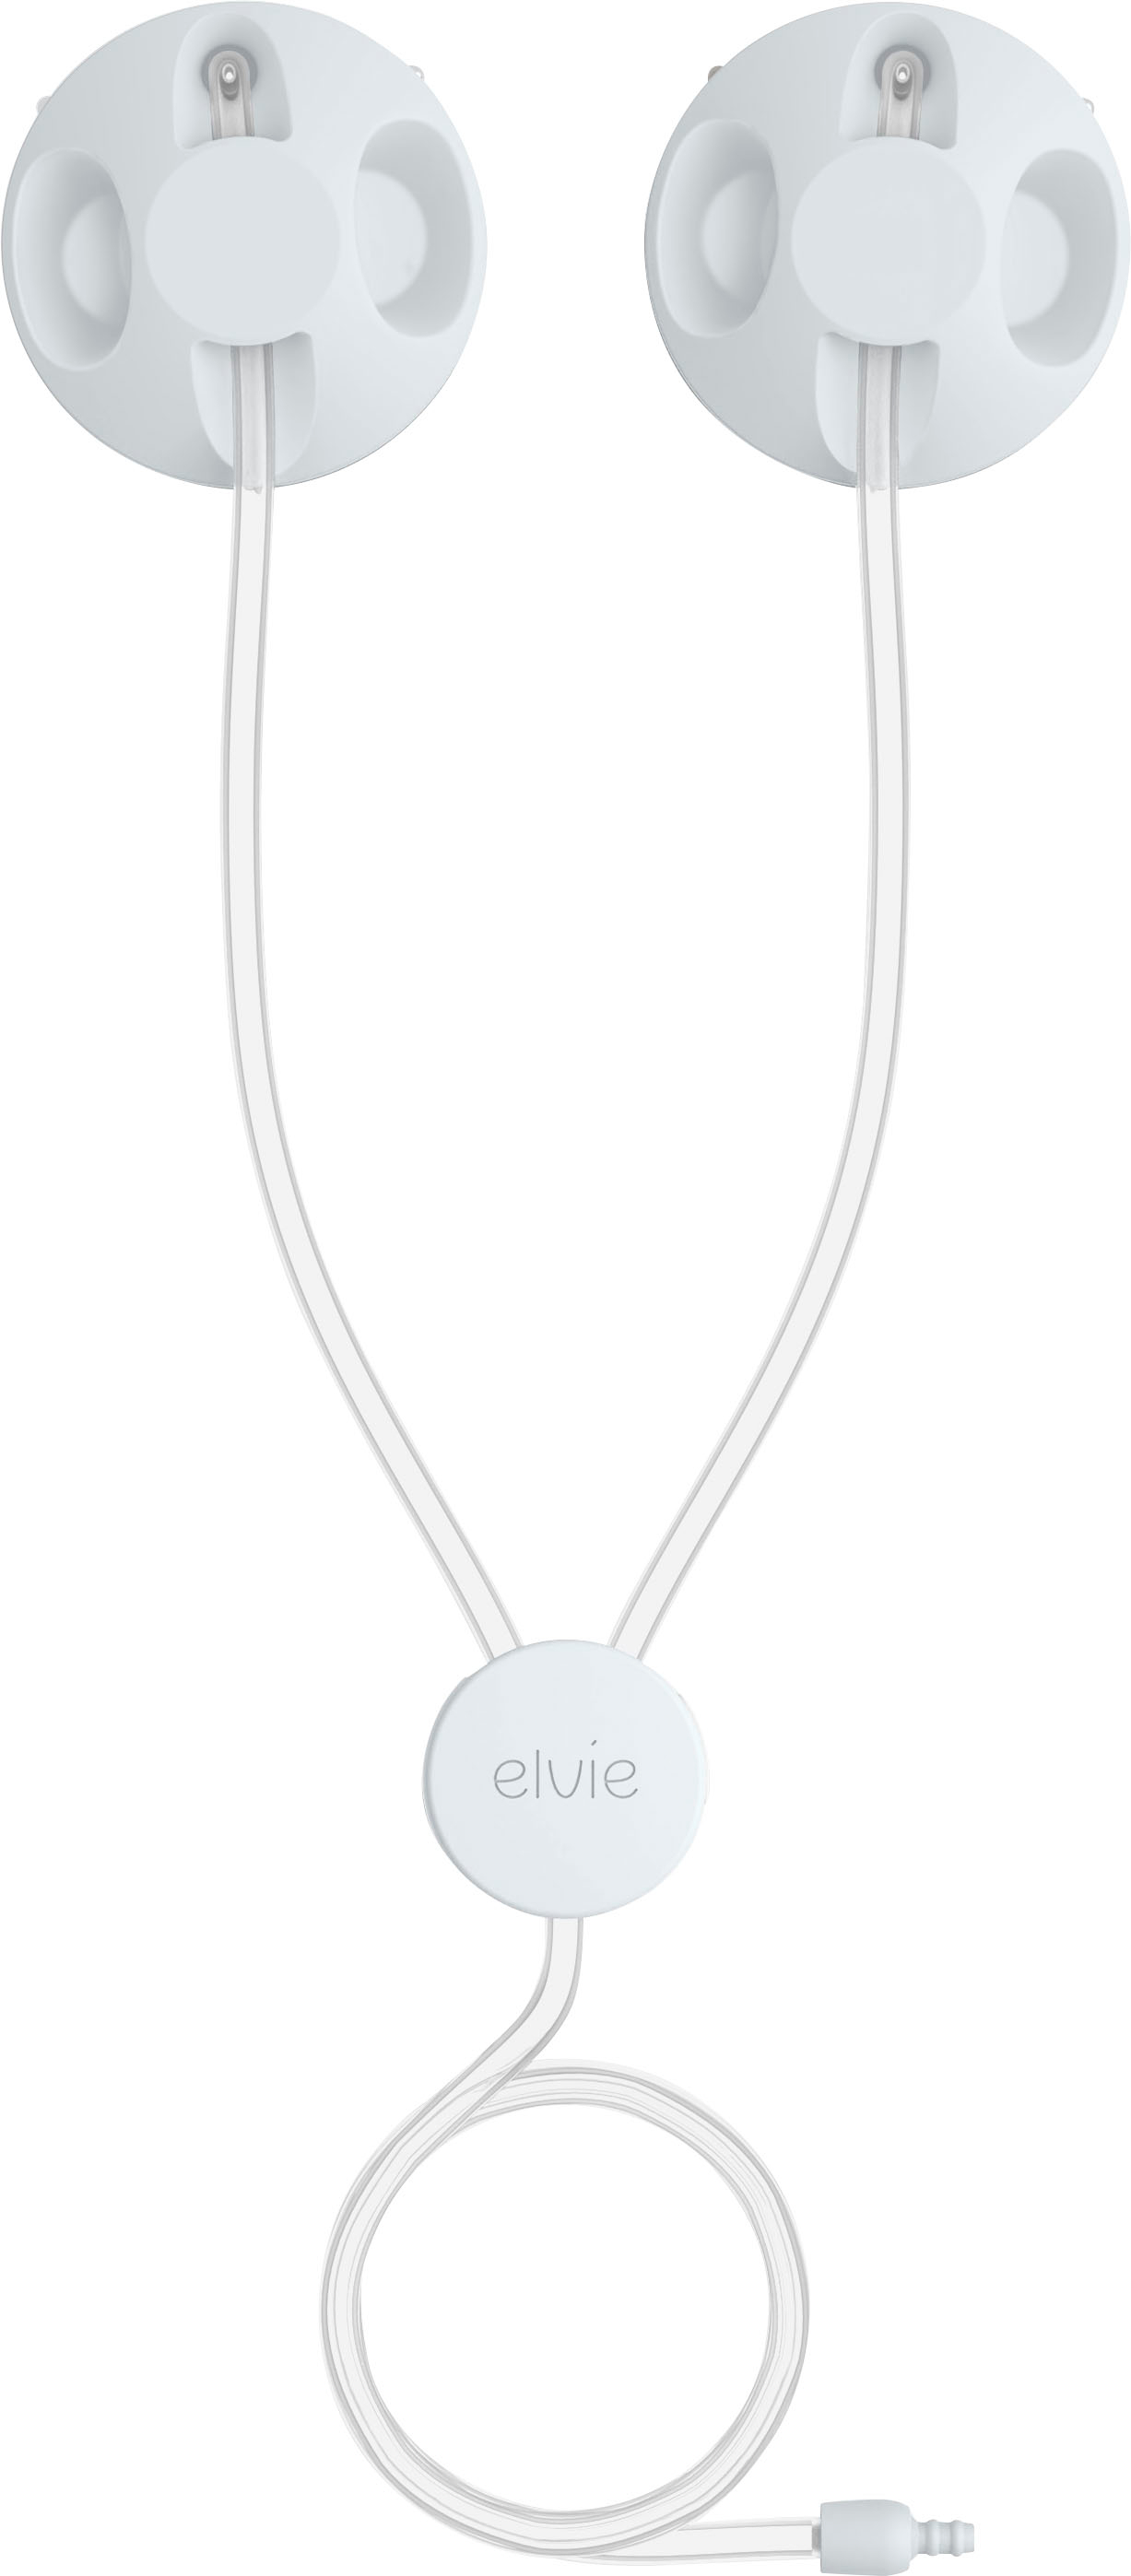 Elvie Stride Connect Kit (Double) White EB01-CON02 - Best Buy